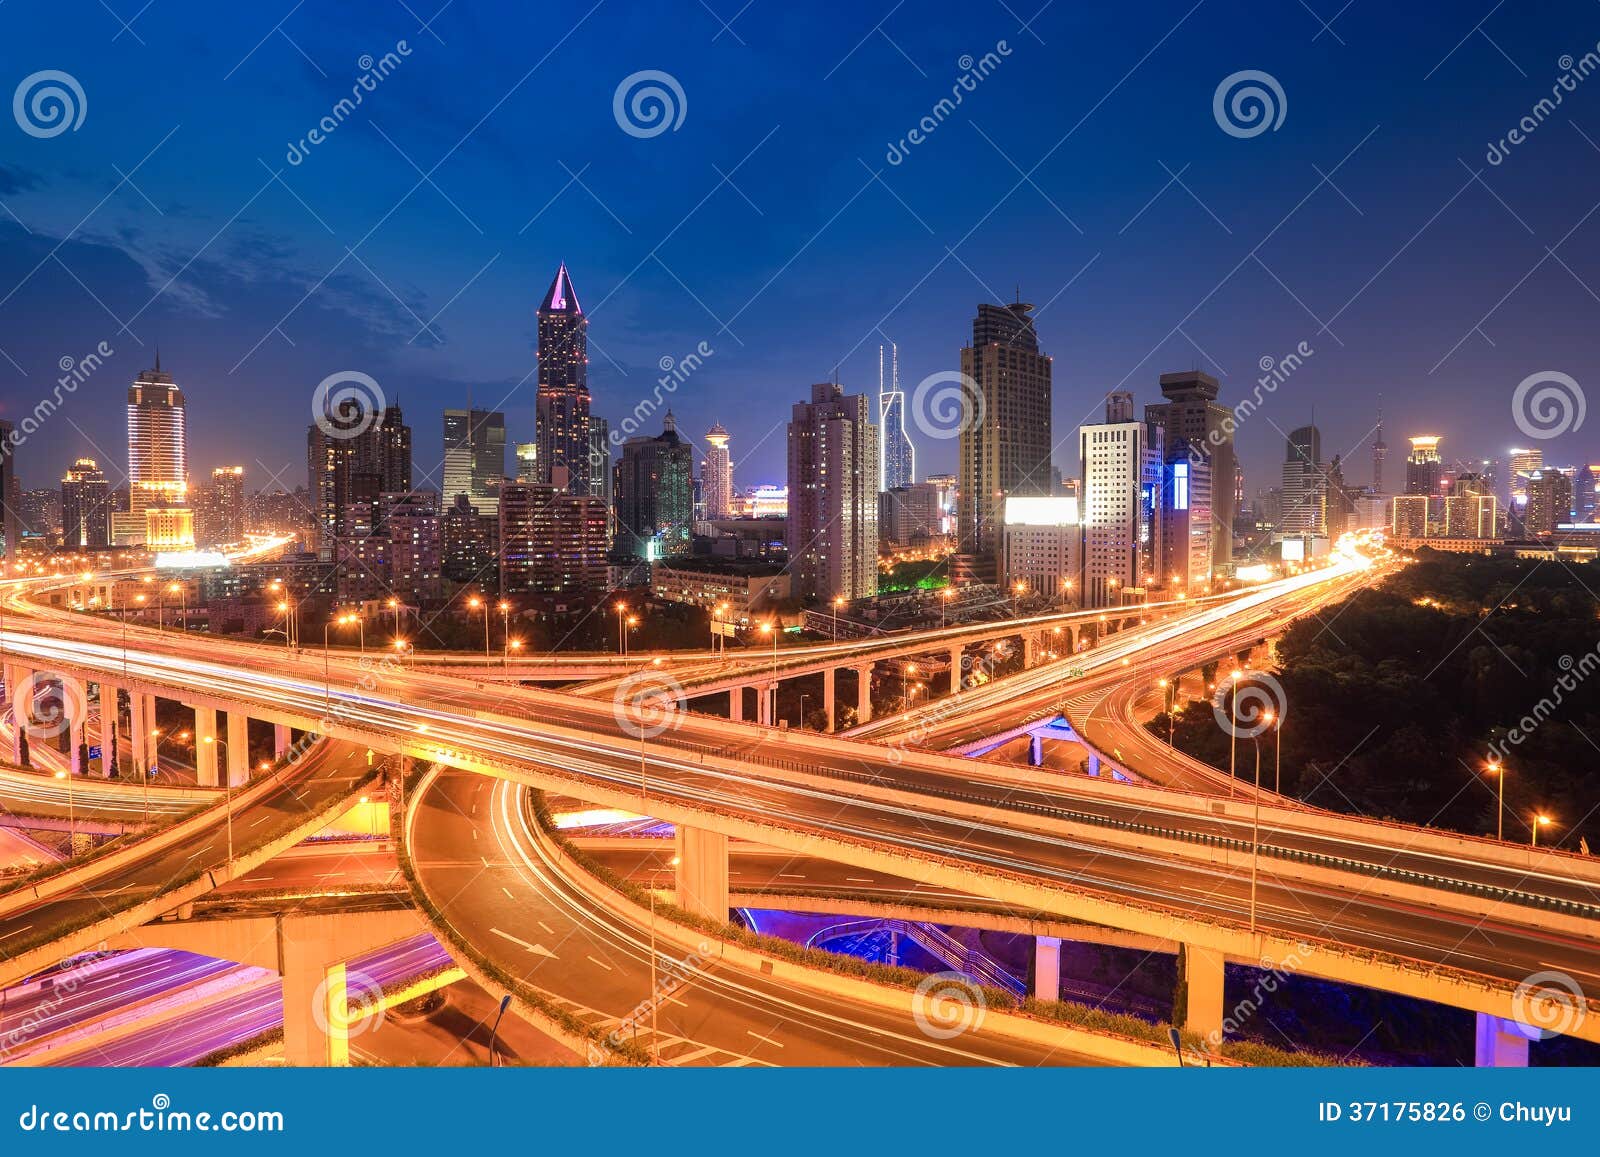 city highway traffic in nightfall